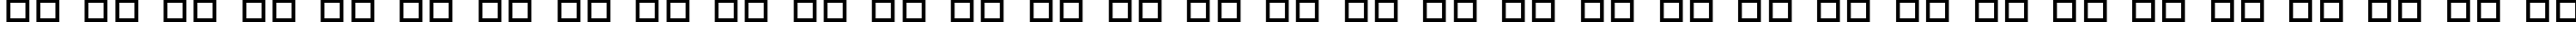 Пример написания русского алфавита шрифтом Trebuchet MS Italic